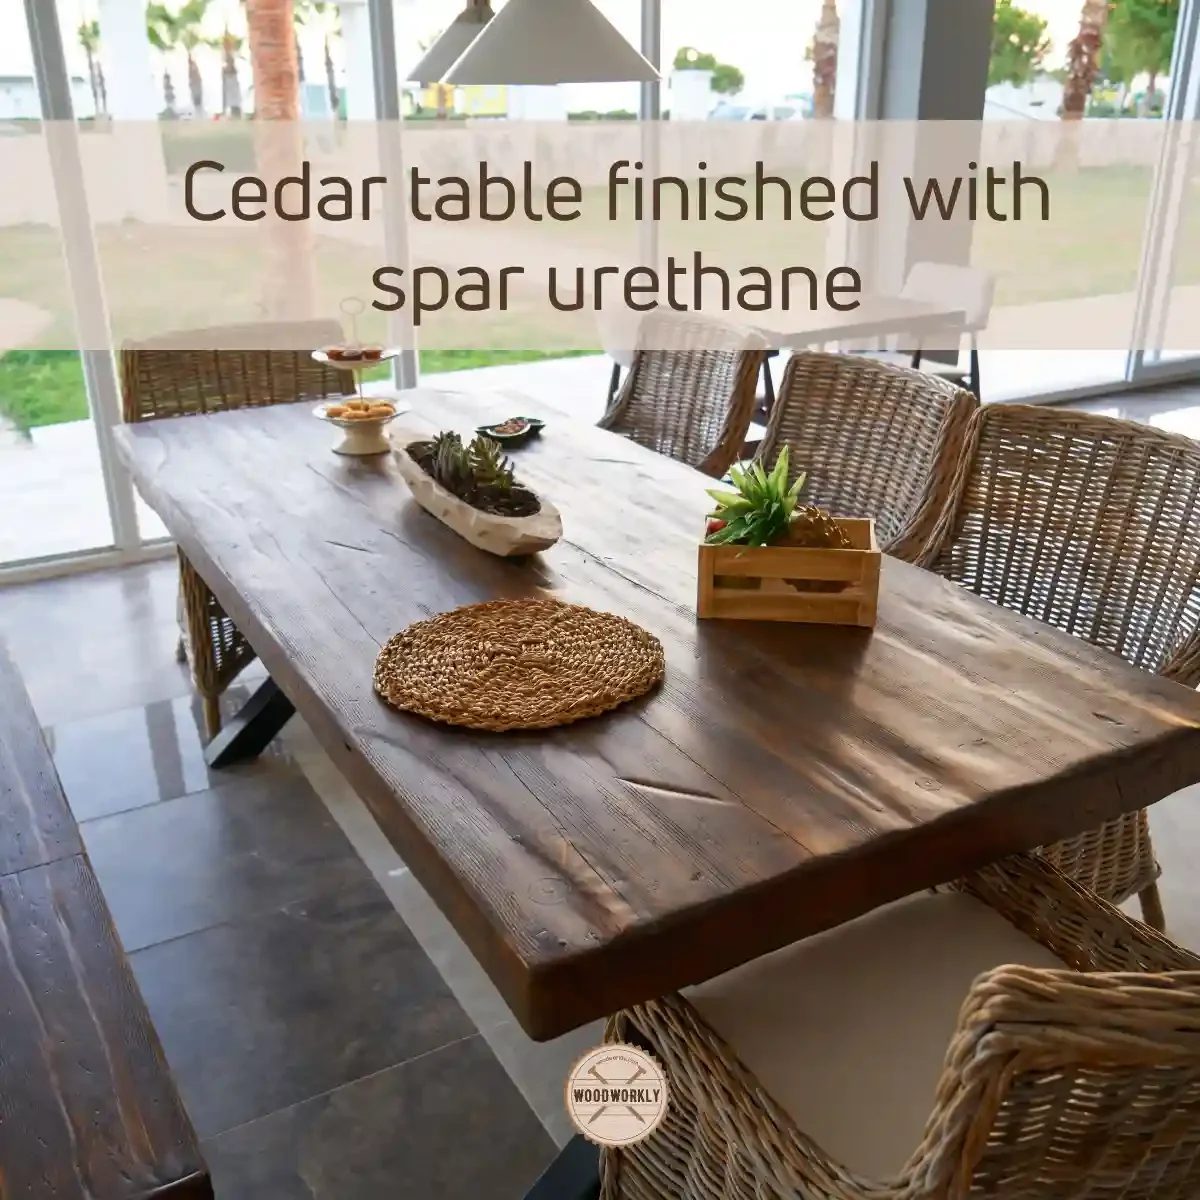 Cedar table finished with spar urethane